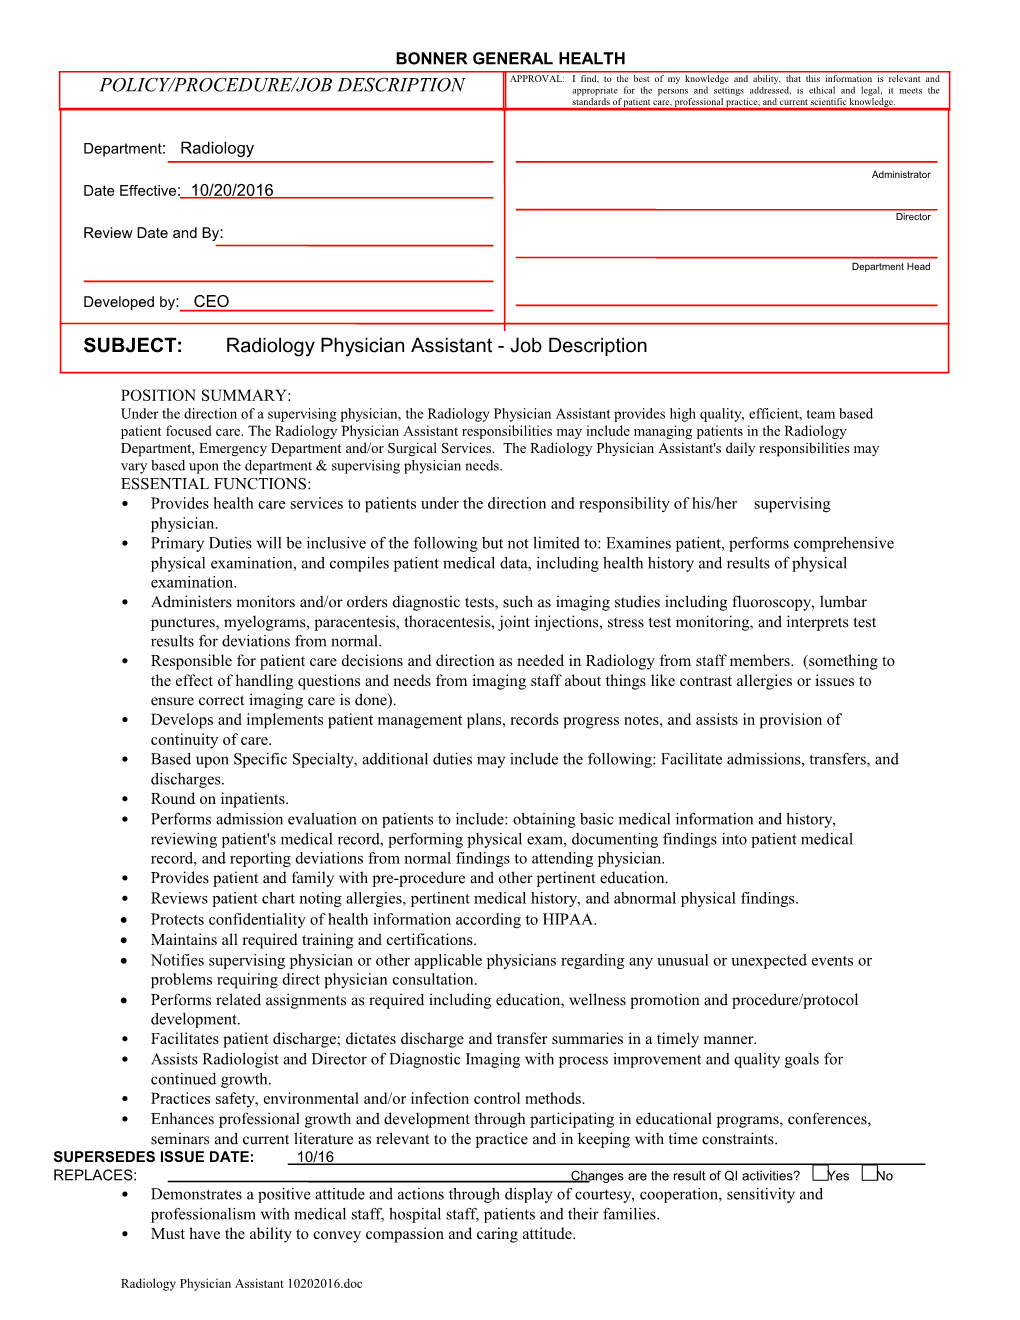 Subject:Radiology Physician Assistant - Job Description